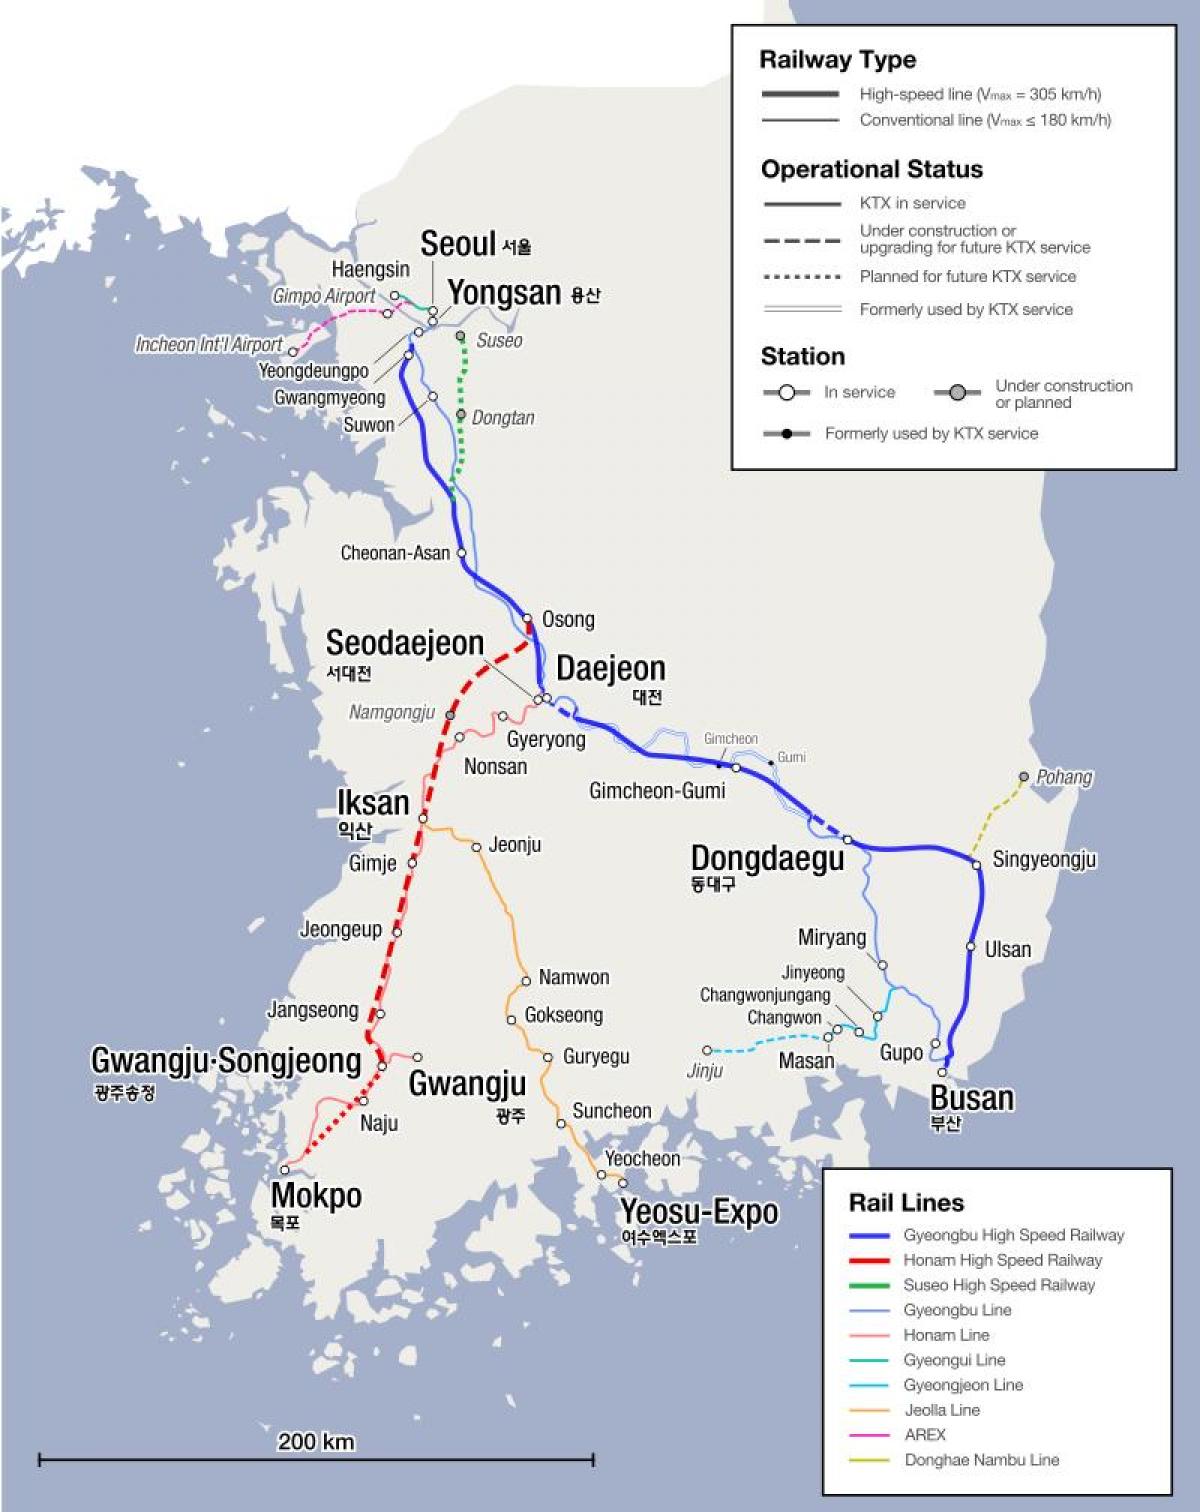 韓国(ROK)の鉄道路線図